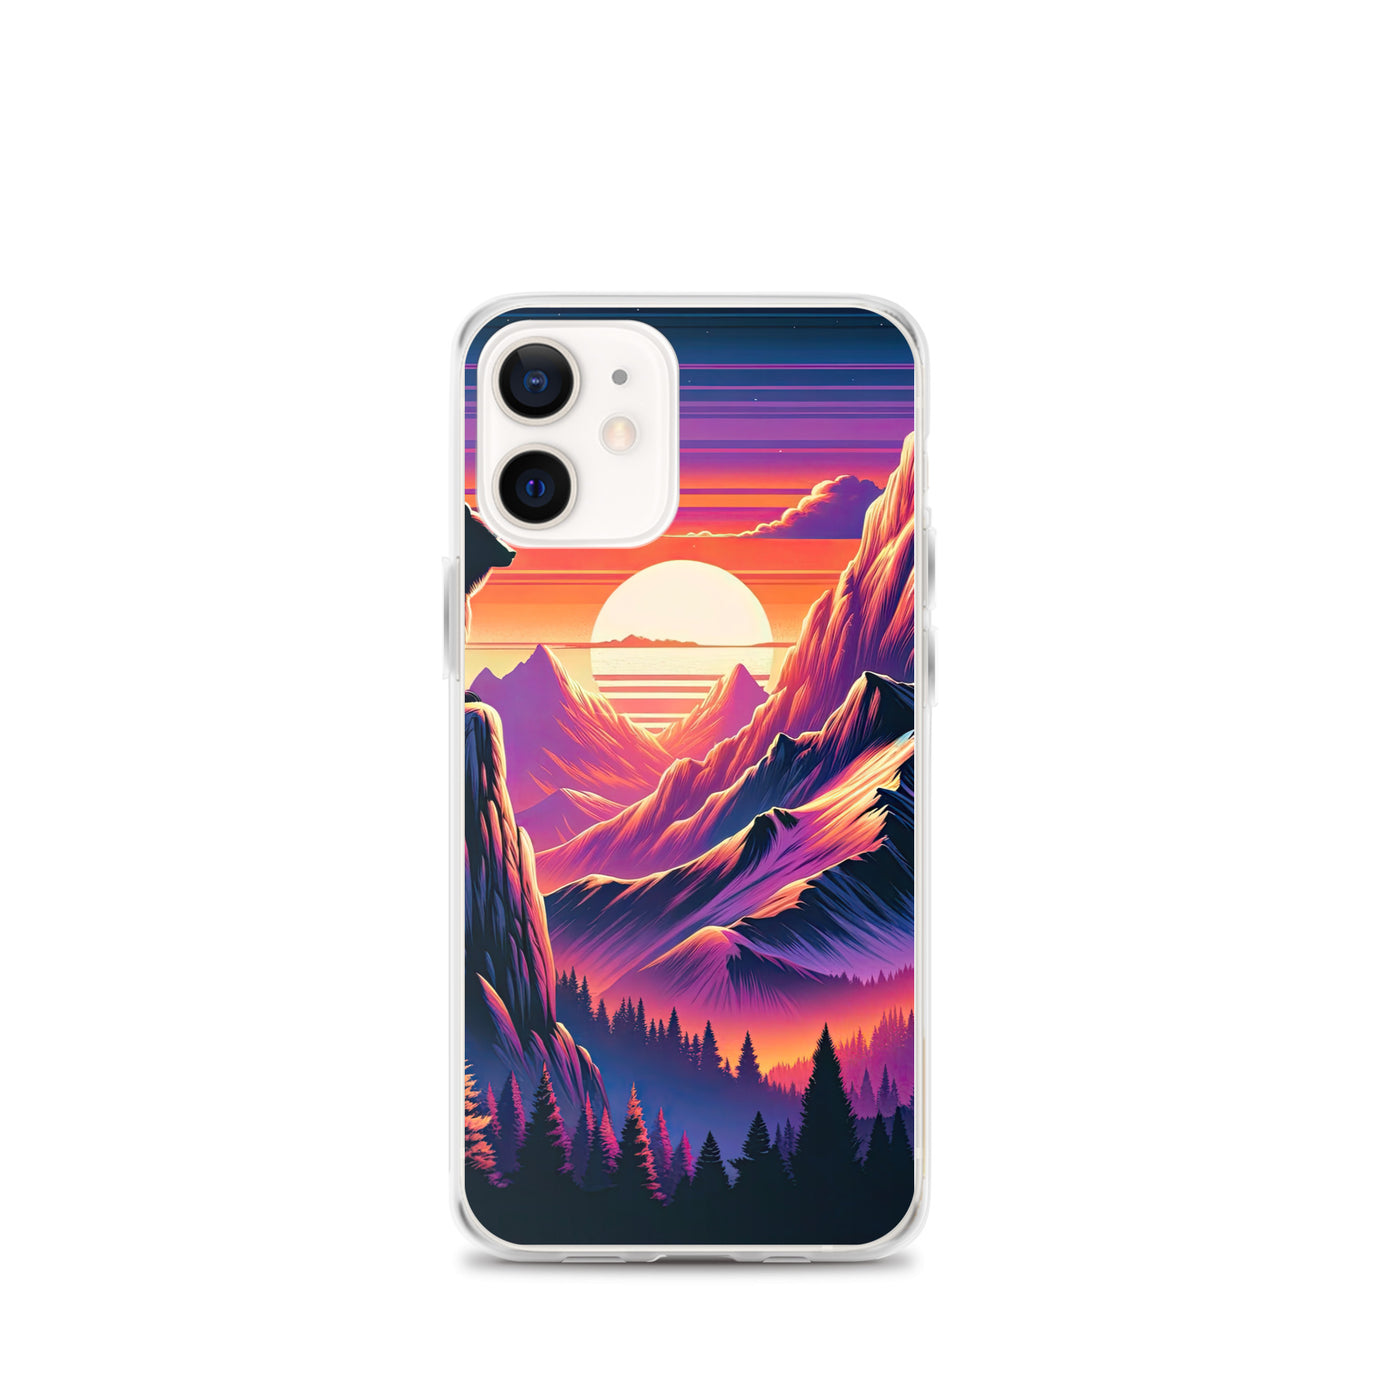 Alpen-Sonnenuntergang mit Bär auf Hügel, warmes Himmelsfarbenspiel - iPhone Schutzhülle (durchsichtig) camping xxx yyy zzz iPhone 12 mini